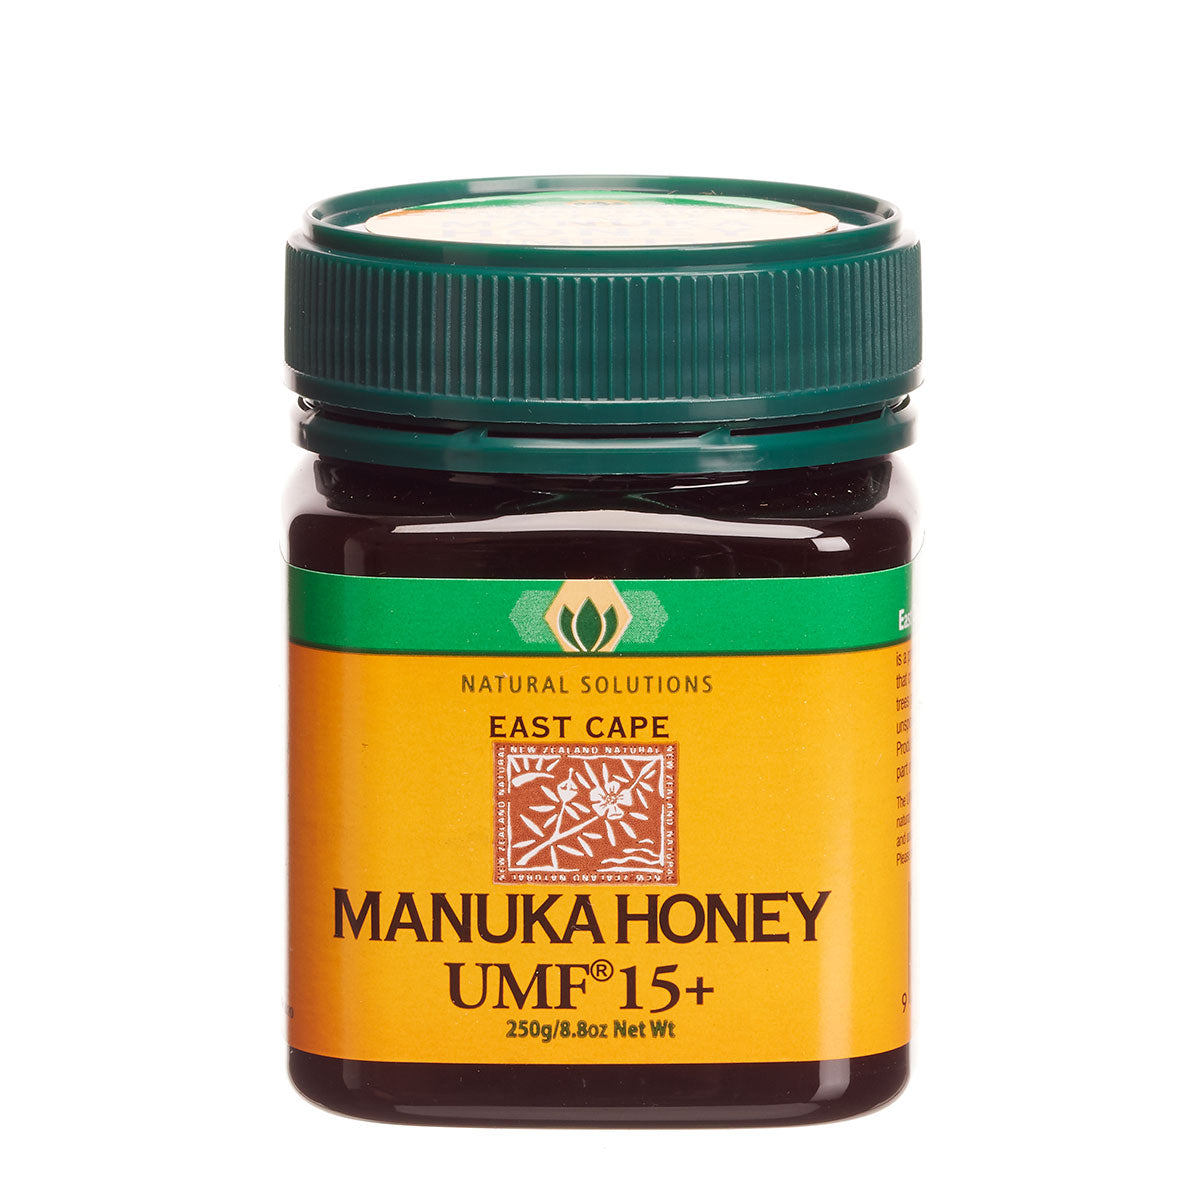 Manuka honey - every medicine cabinet should have it